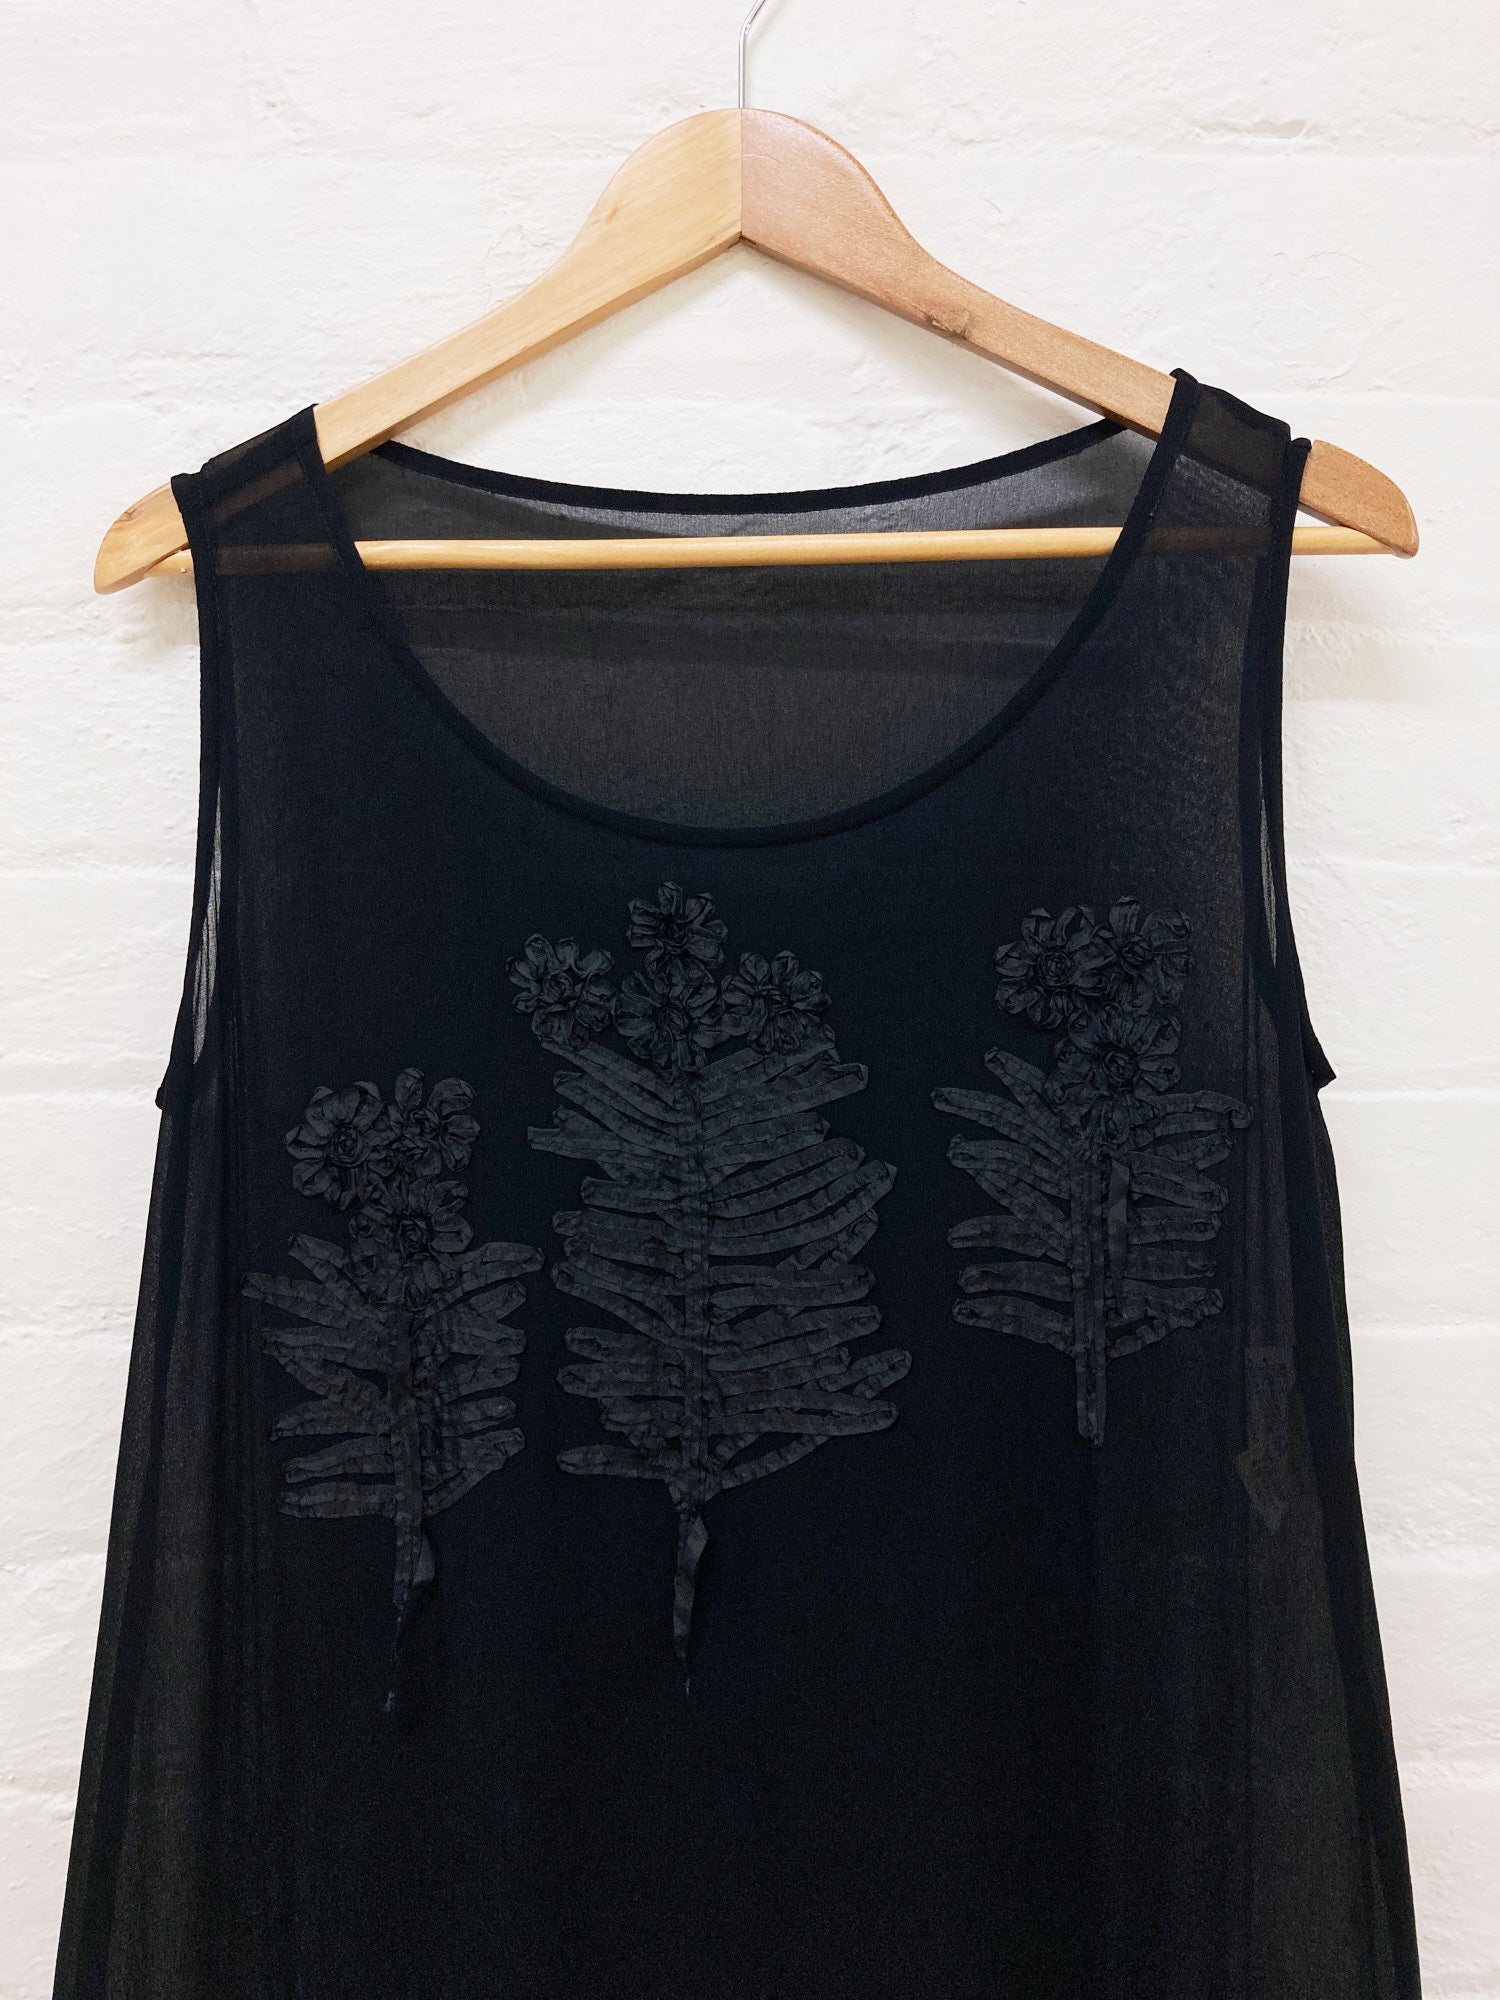 Comme des Garcons 1995 sheer black crepe sleeveless dress with leaf applique